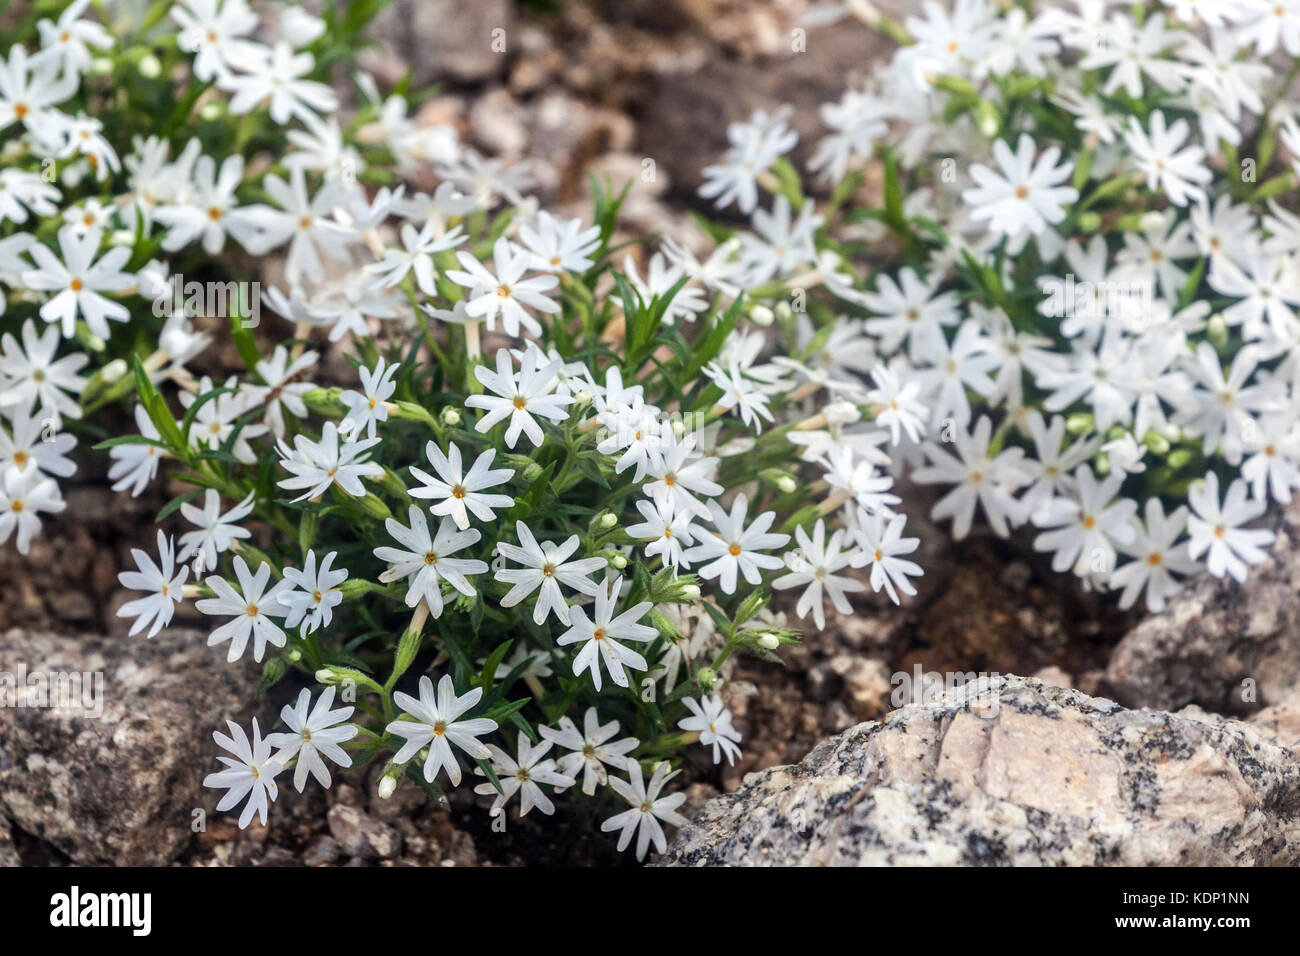 Phlox 'Snow Flake' to rock garden White flowers ground cover plants alpine plants rockery stone Stock Photo